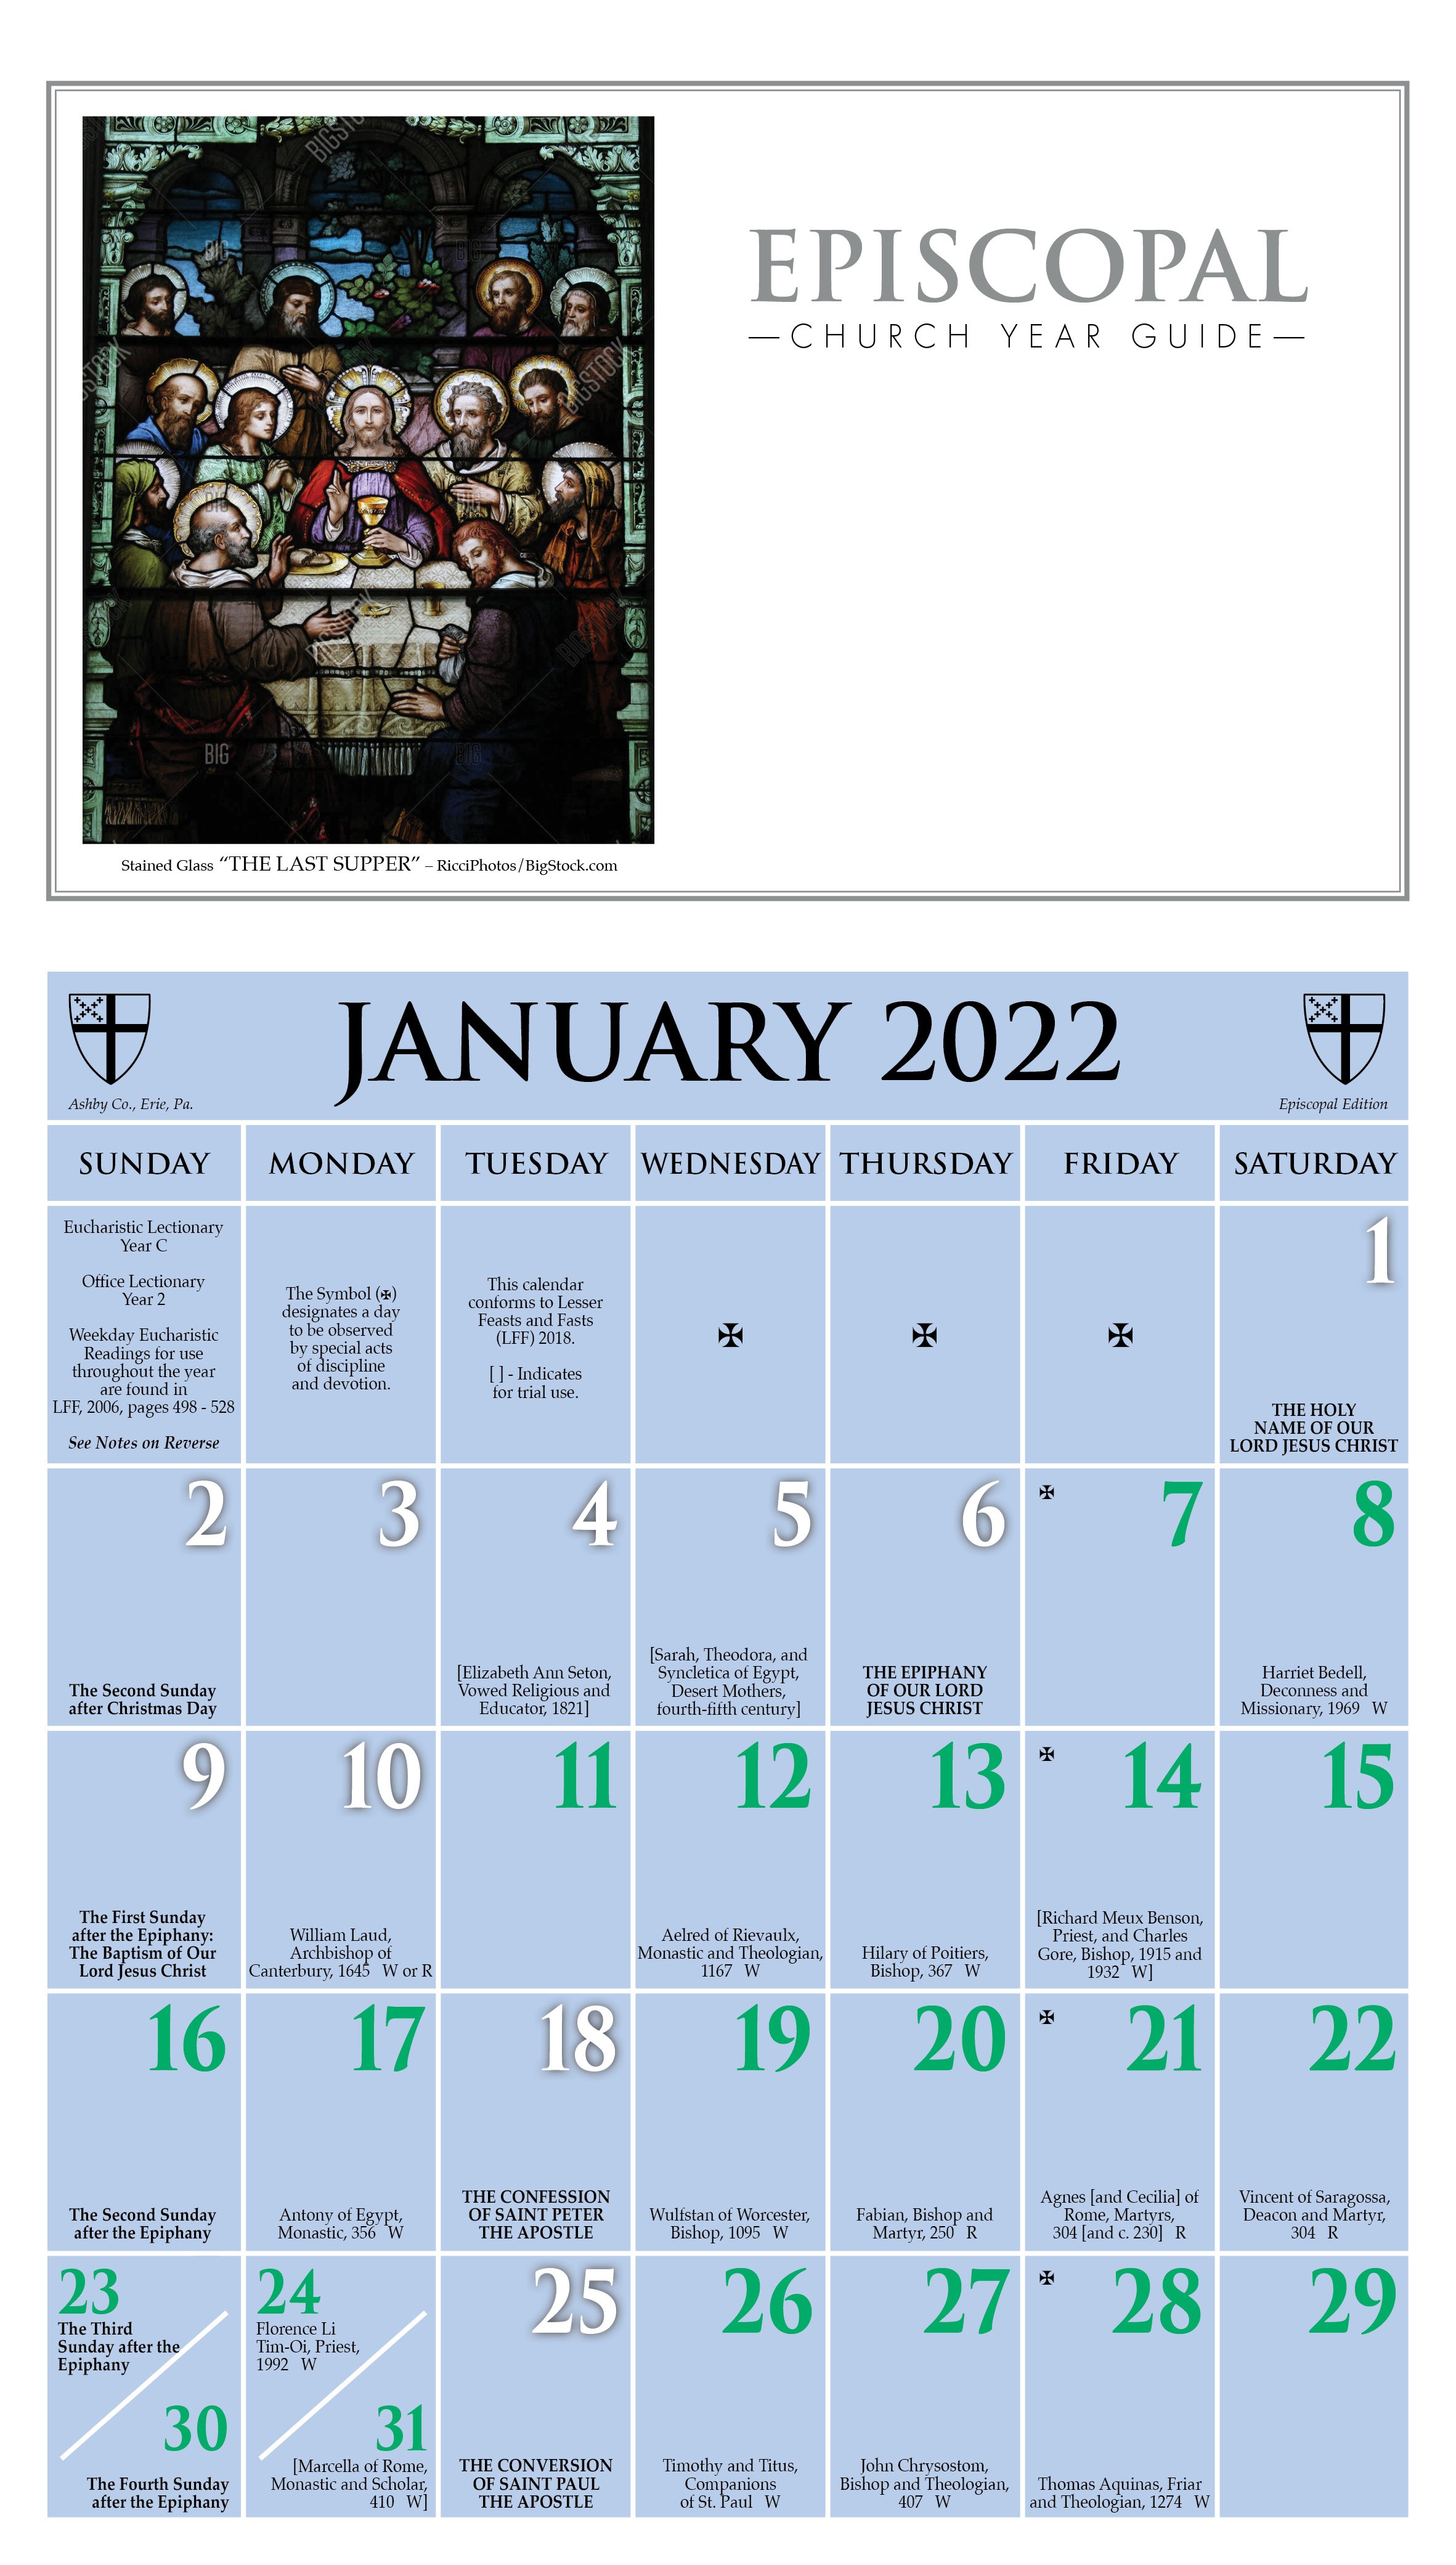 Episcopal Church Calendar 2022 Churchpublishing.org: 2022 Episcopal Church Year Guide Kalendar